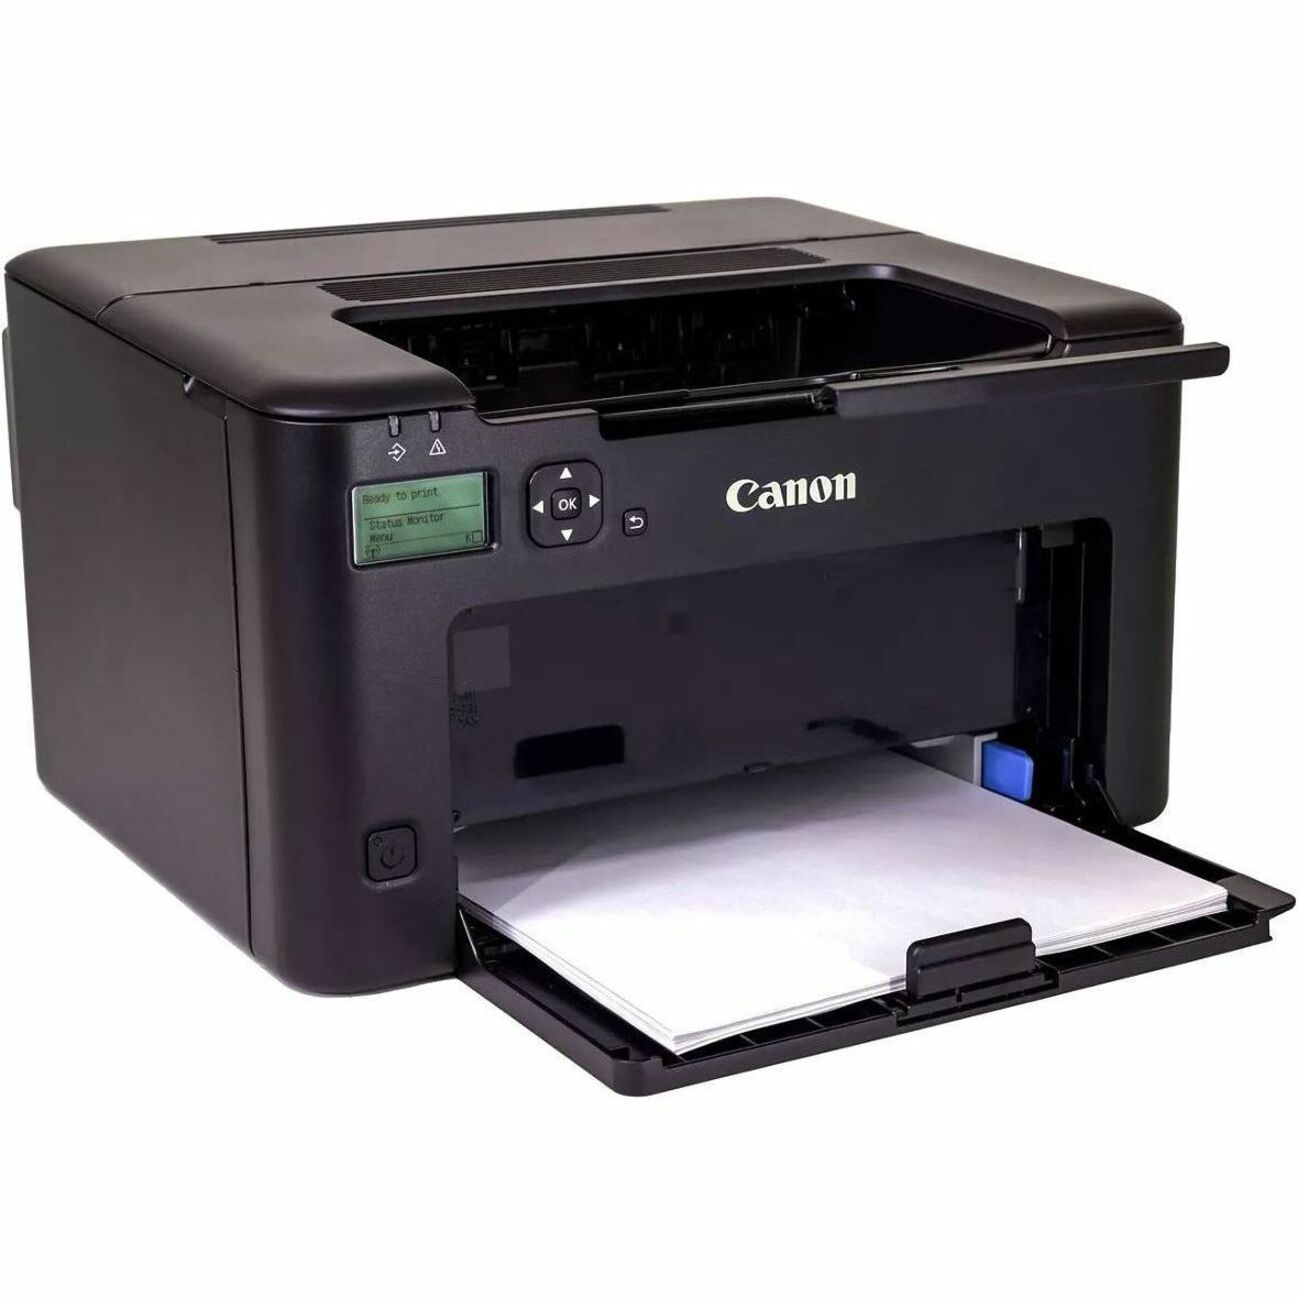 Canon 5620C006 imageCLASS LBP122dw Wireless Duplex Laser Printer, Monochrome, 30 ppm, 600 x 600 dpi